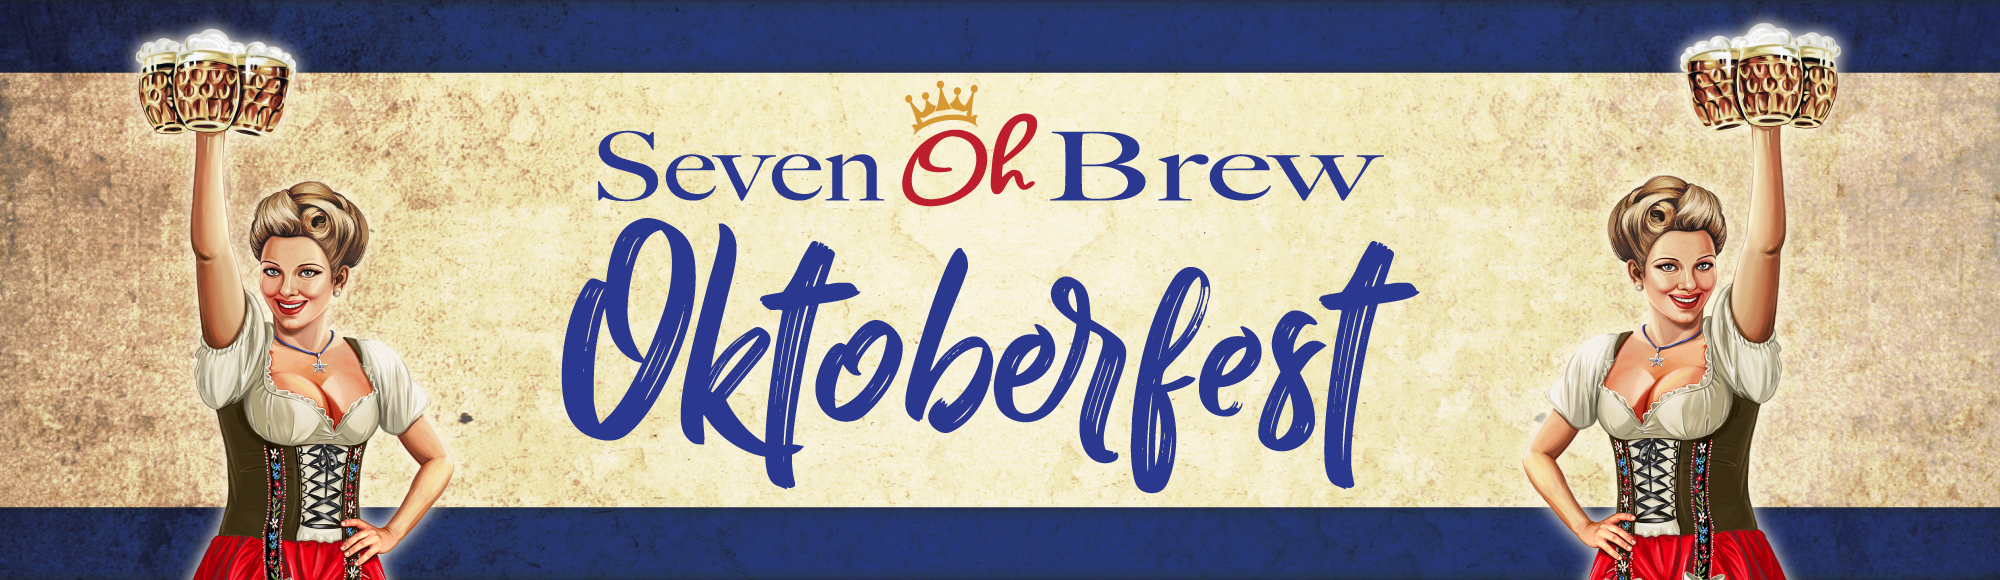 Seven Oh Brew Oktoberfest Las Vegas Tickets